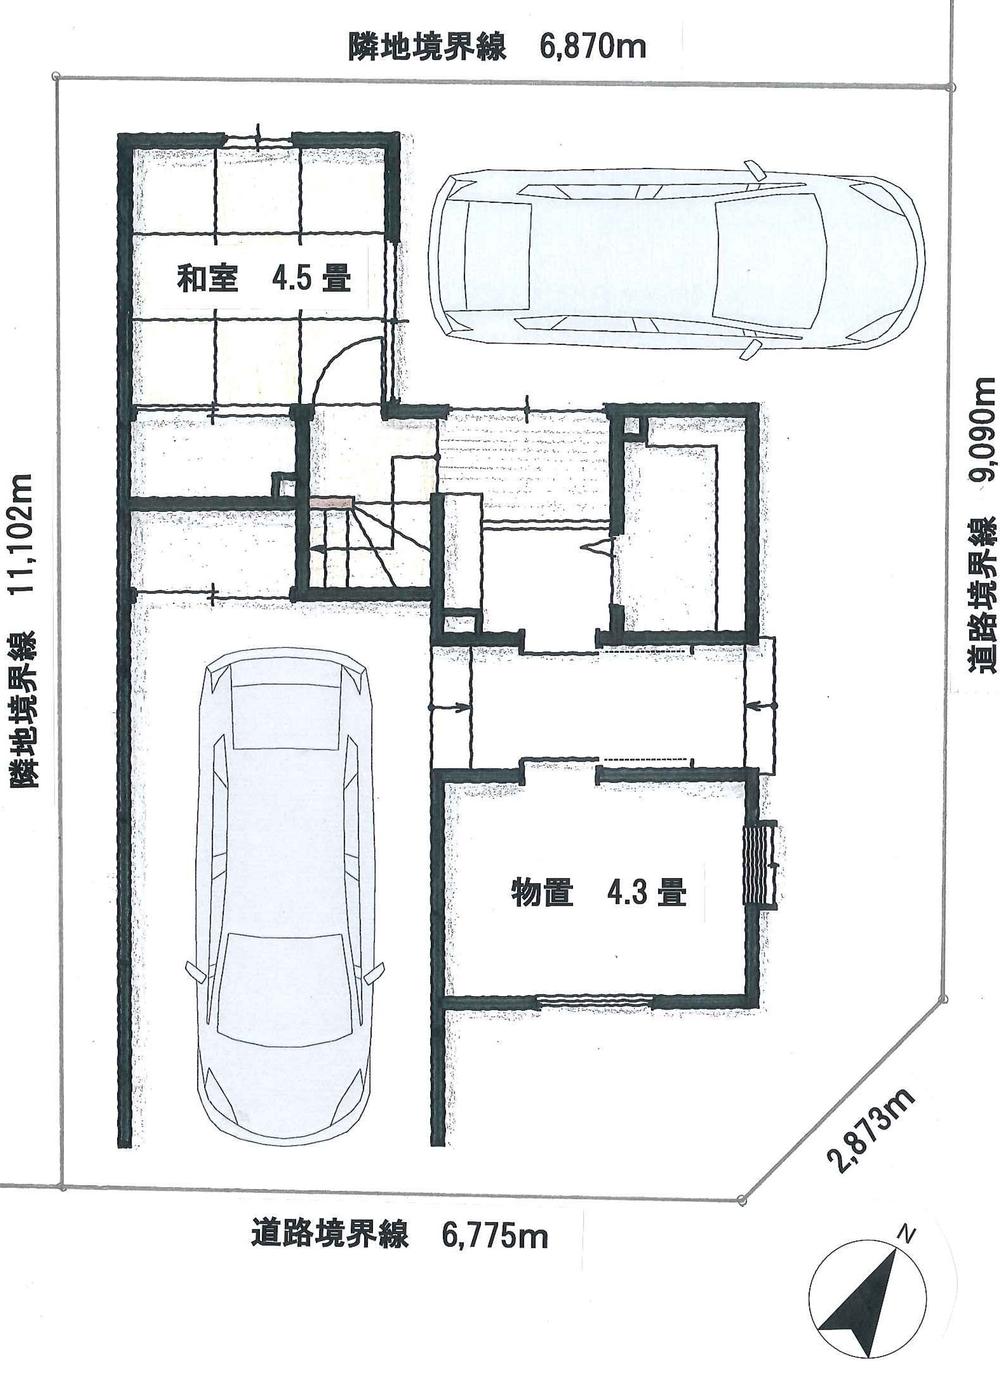 Floor plan. 29,800,000 yen, 4LDK + S (storeroom), Land area 97 sq m , Building area 141.37 sq m 1F plan view ・ layout drawing